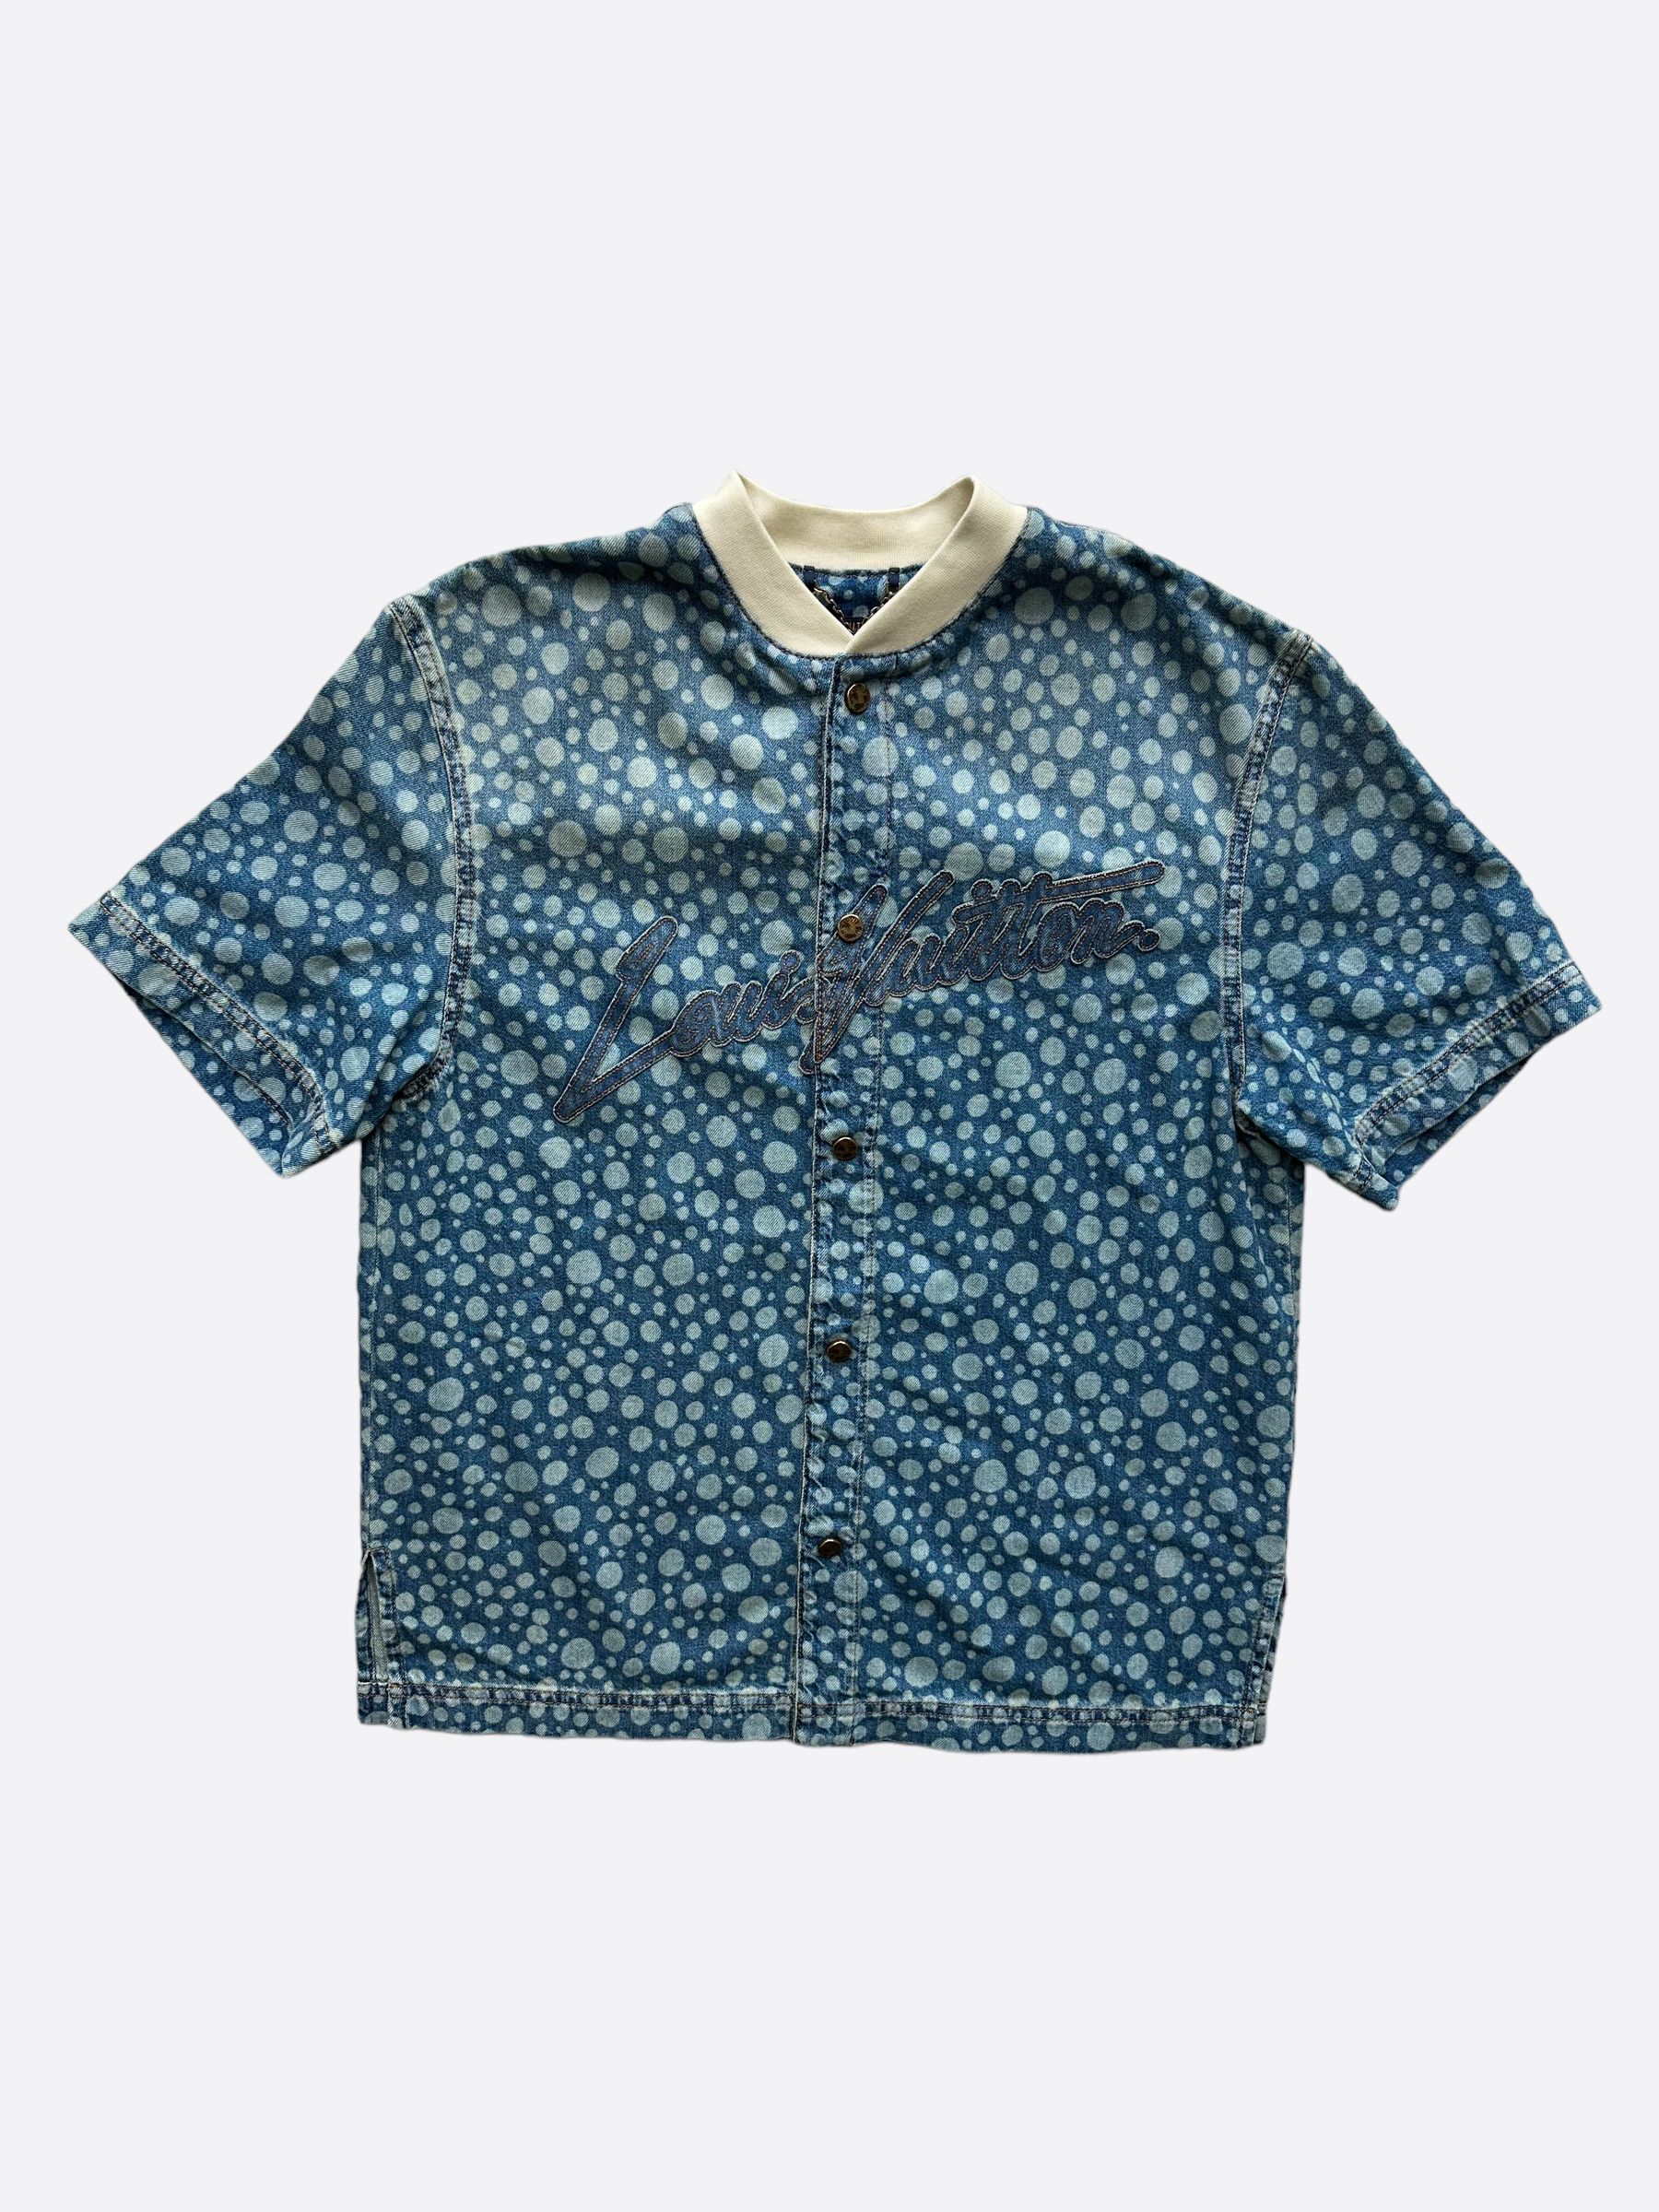 new LOUIS VUITTON Split Galaxy print short sleeve 100% silk hawaiian shirt L